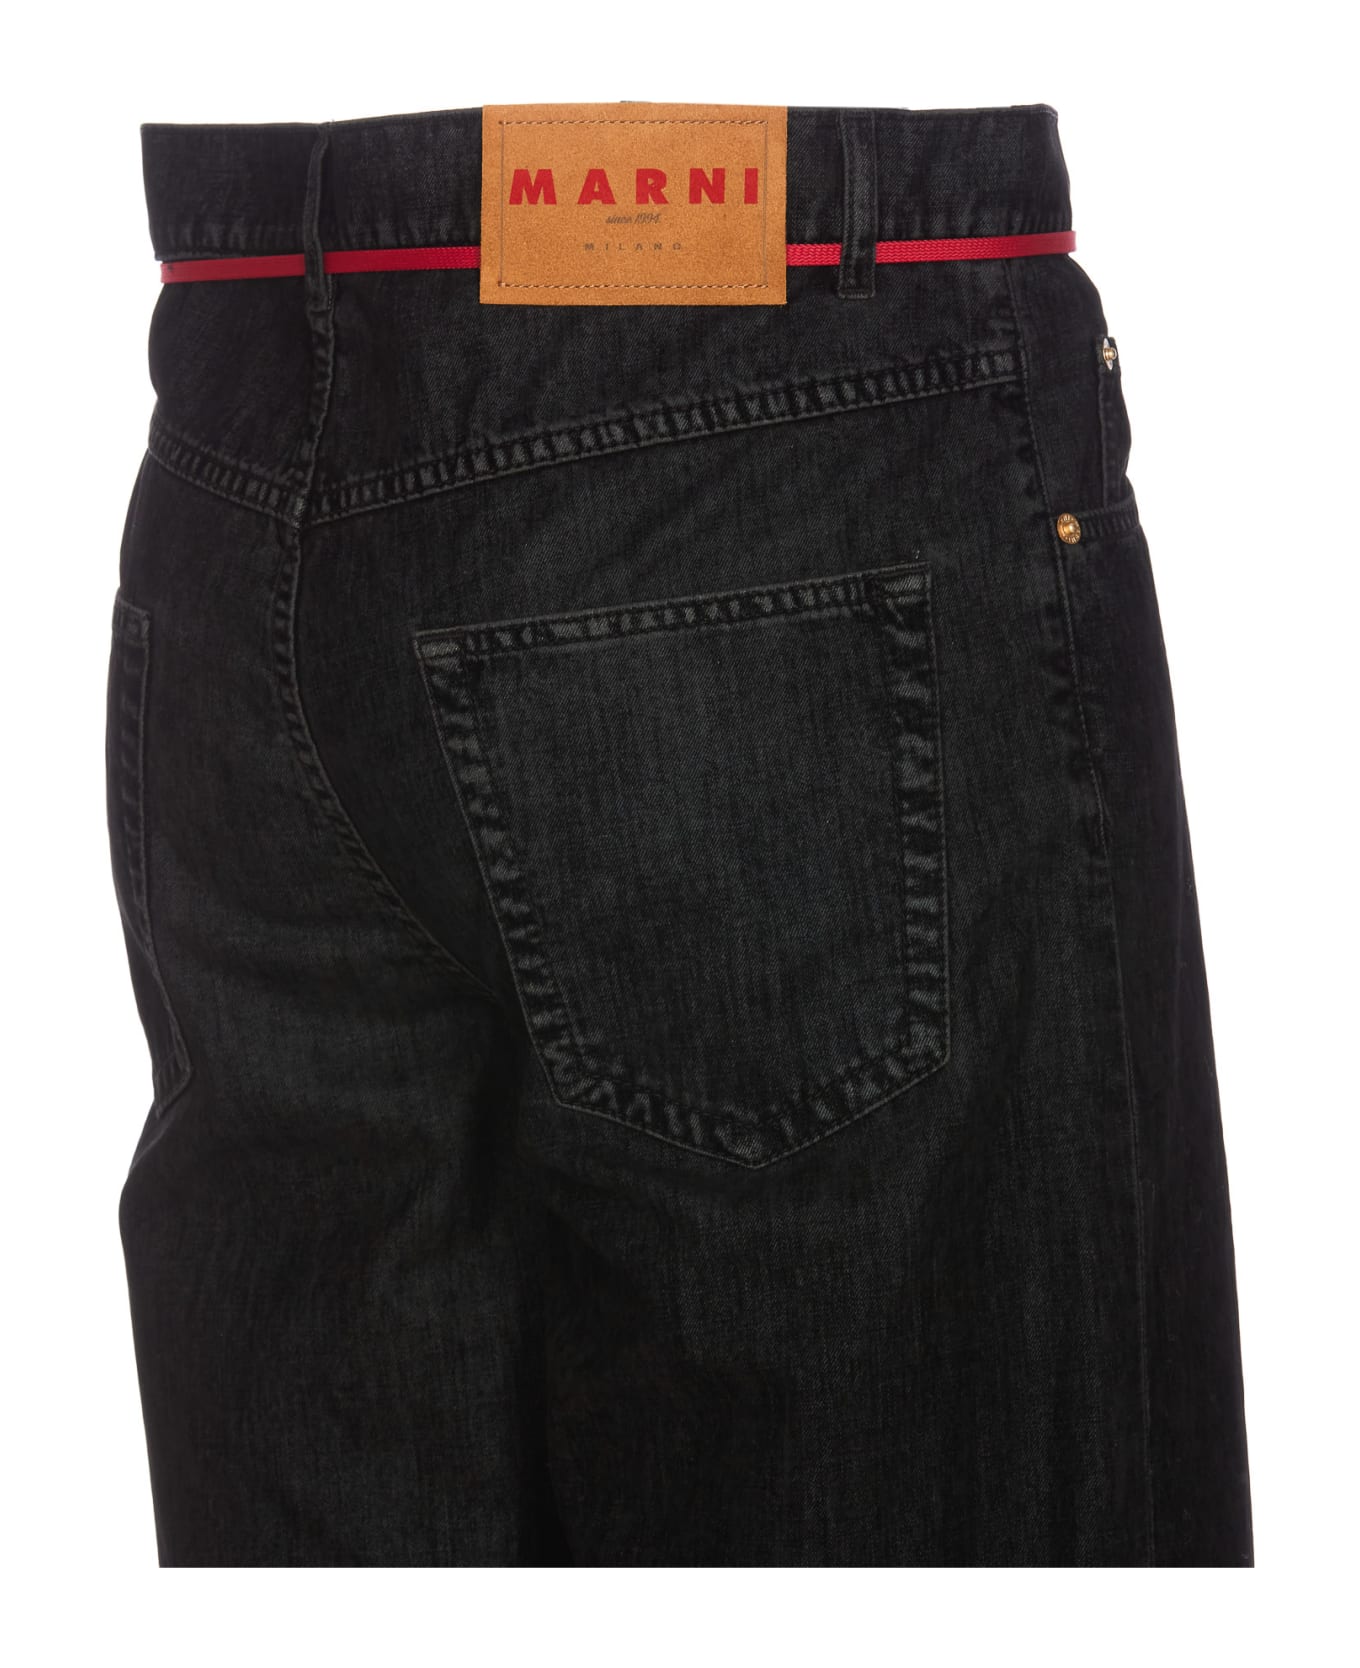 Marni Flared Jeans - Black デニム